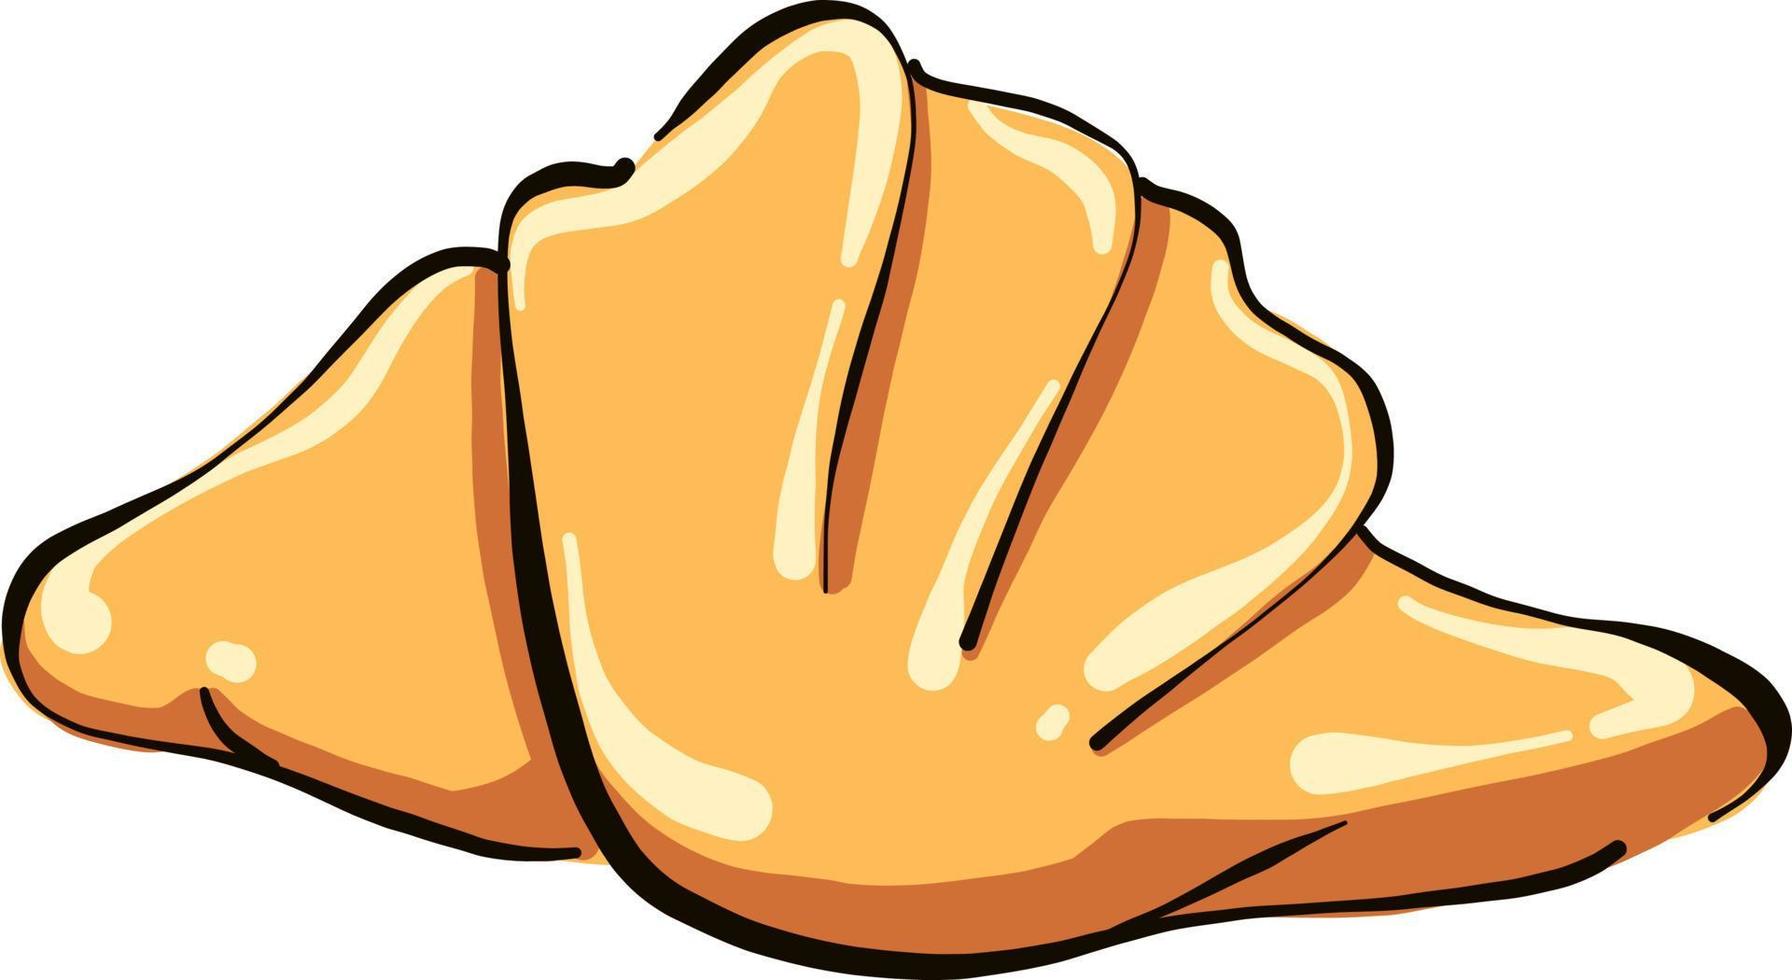 gul croissant , illustration, vektor på vit bakgrund